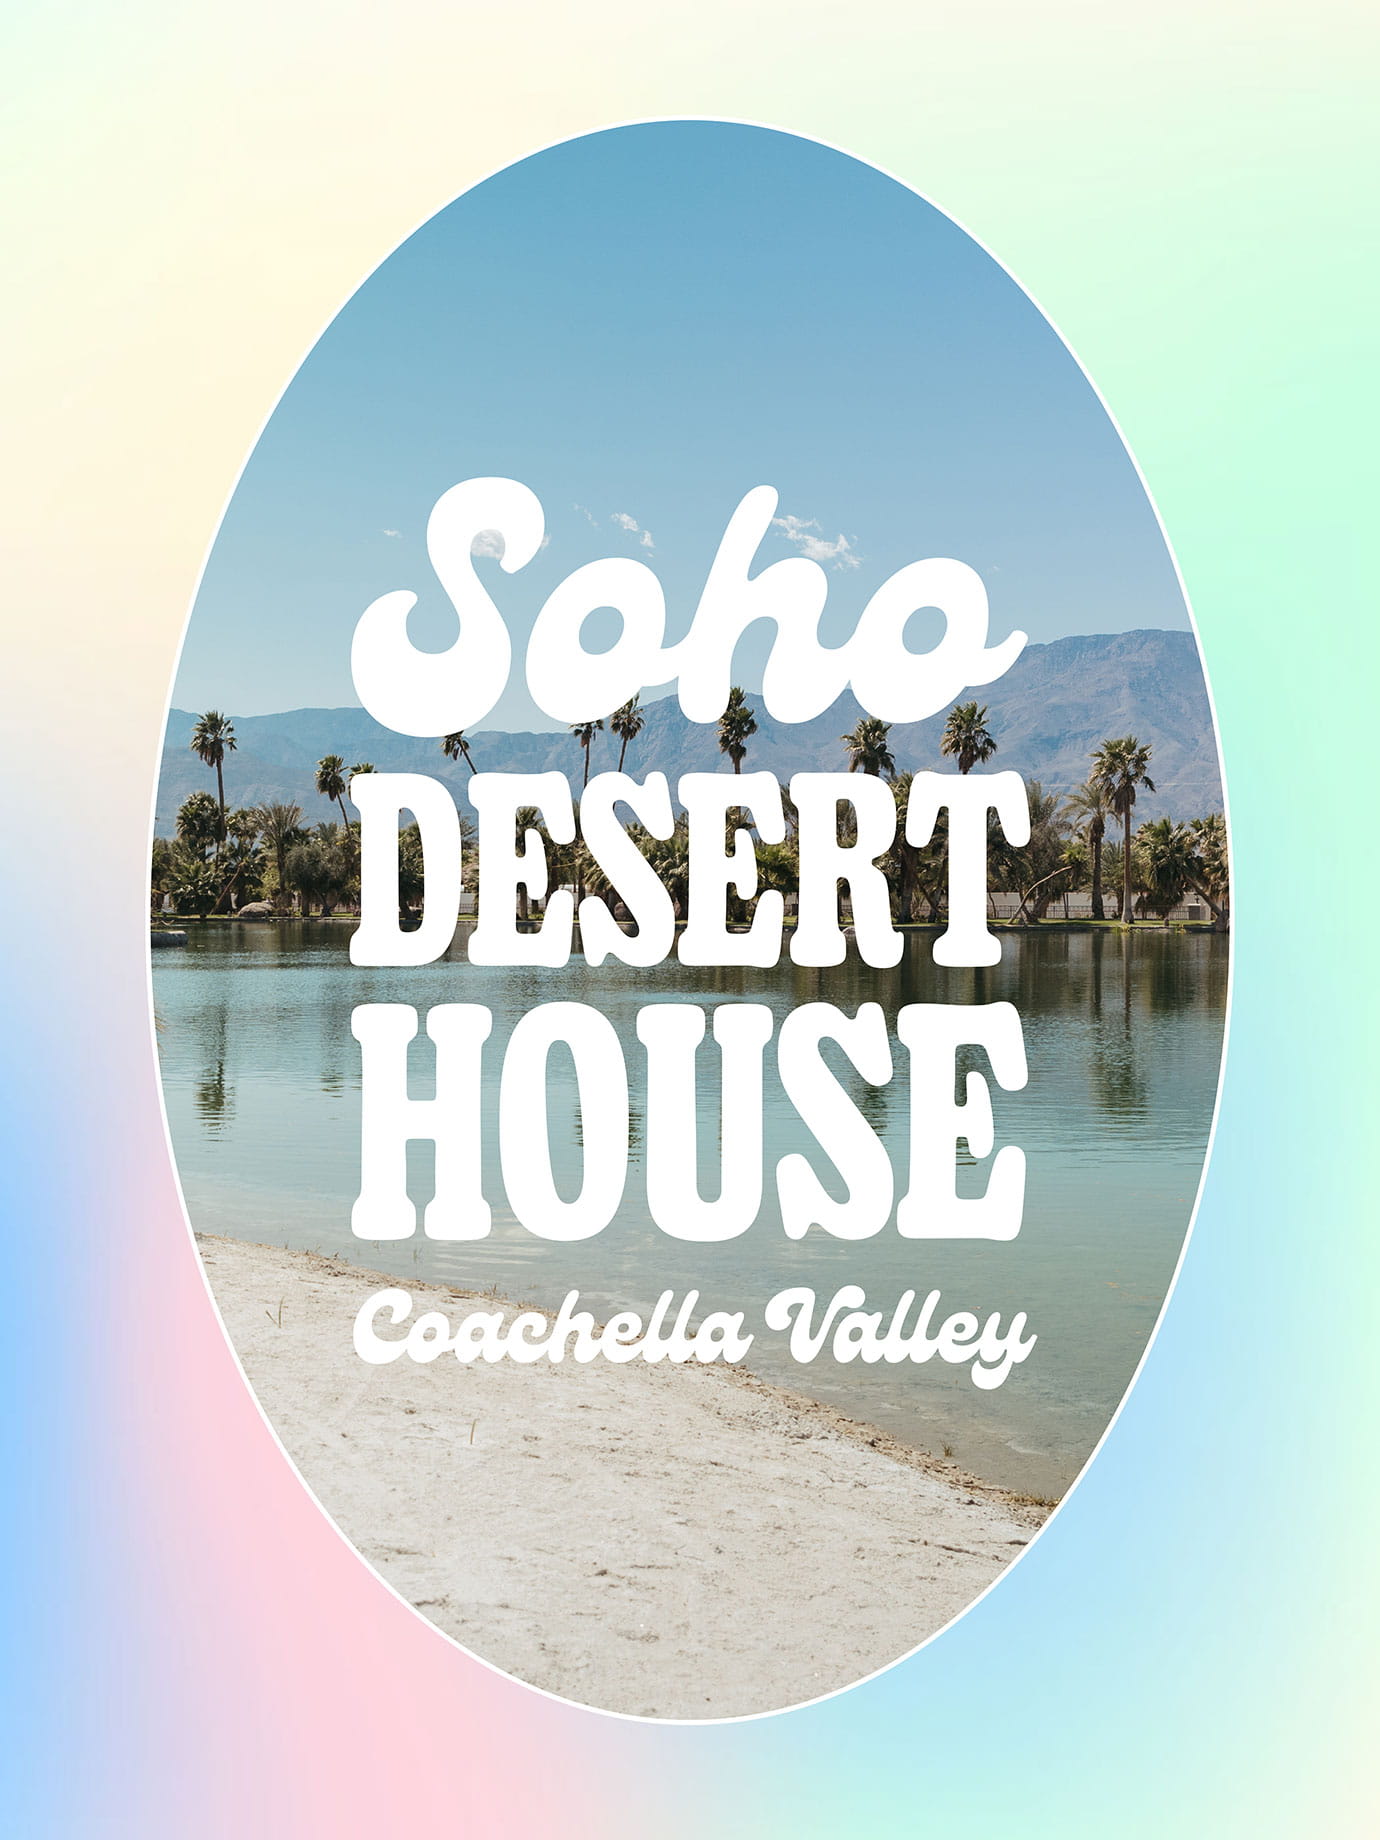 Soho Desert House is back for Coachella weekend